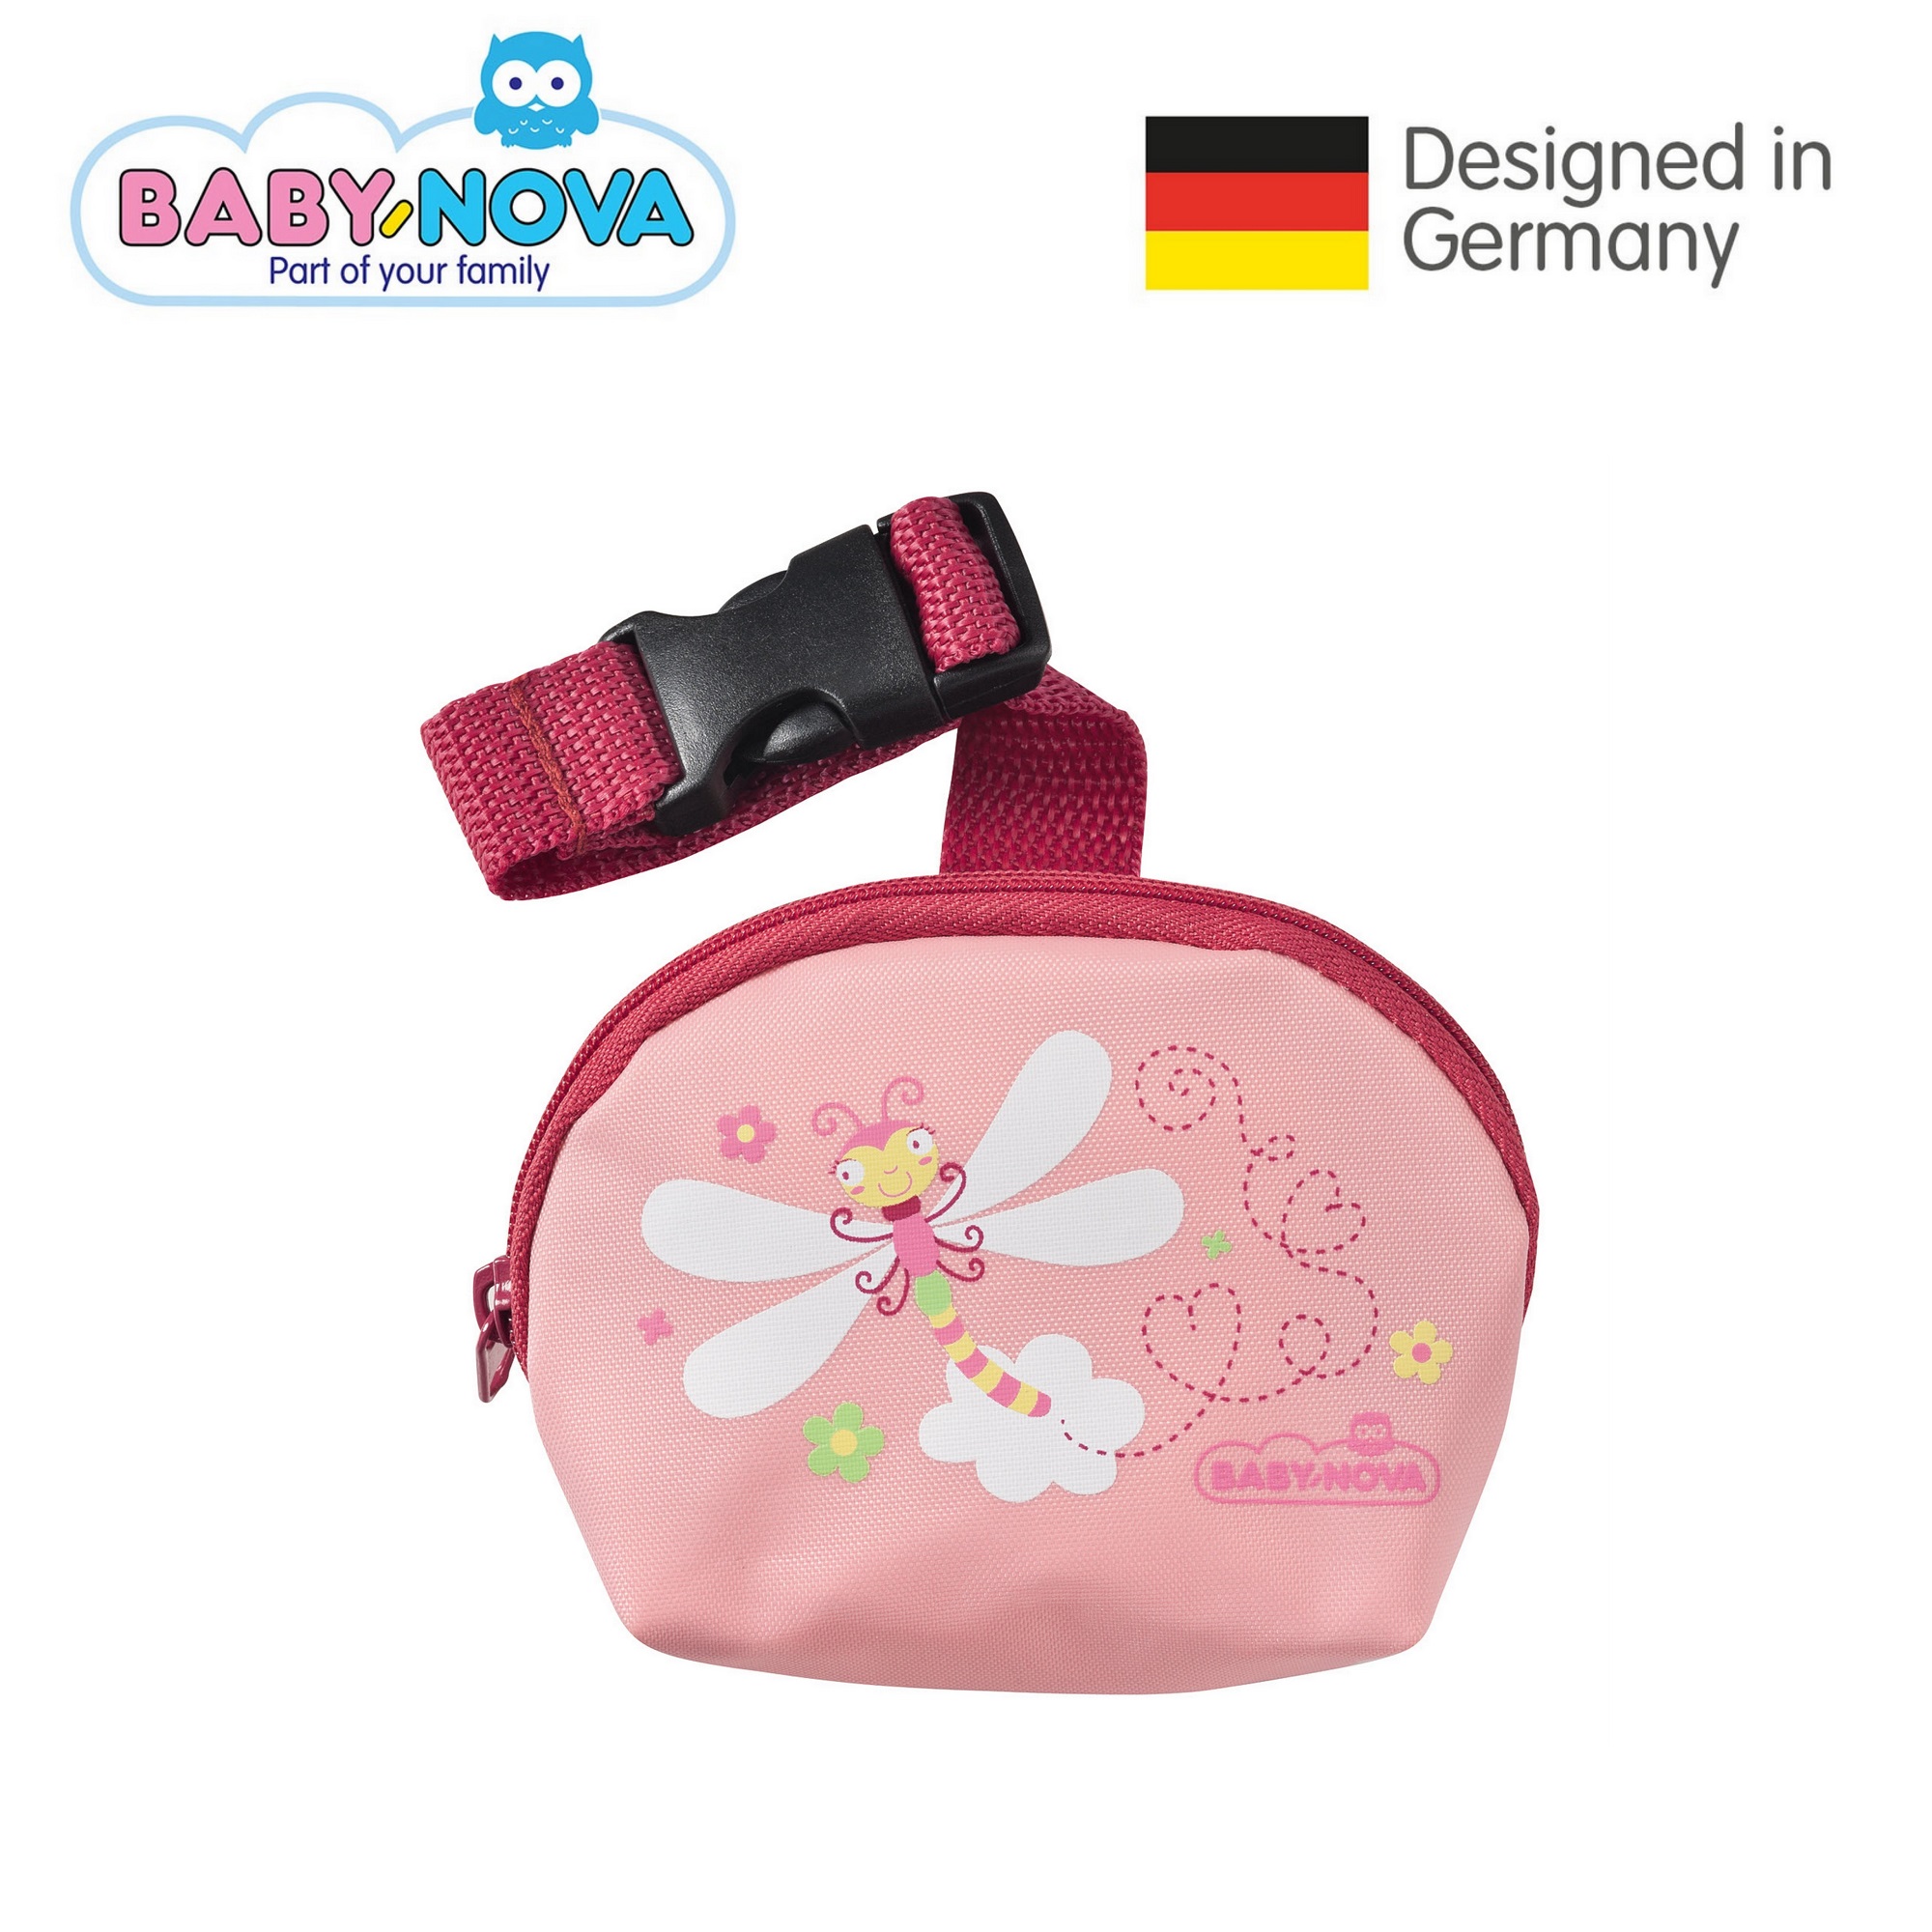 Baby Nova Pacifier Bag